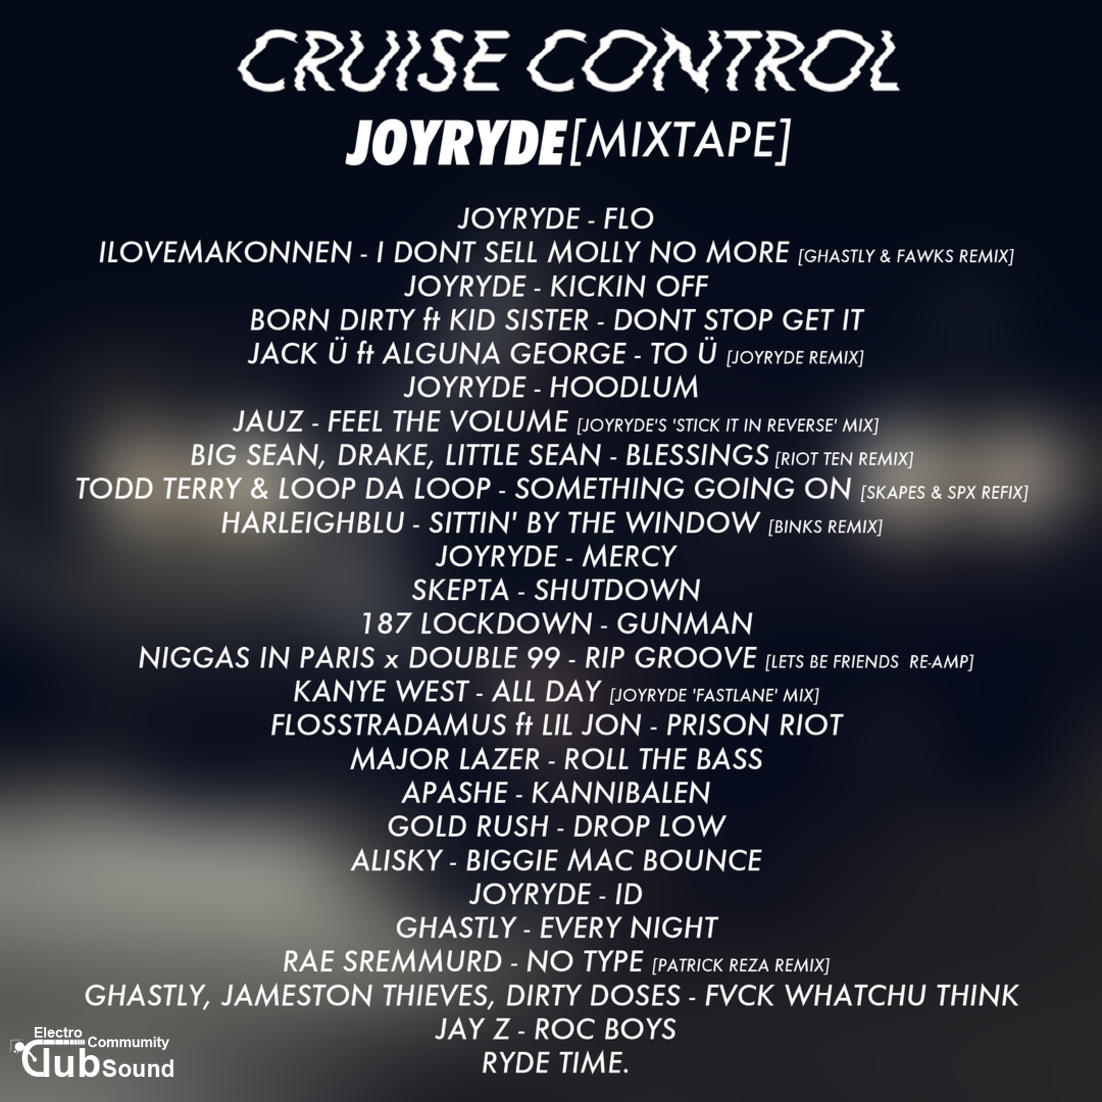 Joyryde – Cruise Control (Mixtape) 2015.png : Joyryde – Cruise Control (Mixtape) 2015